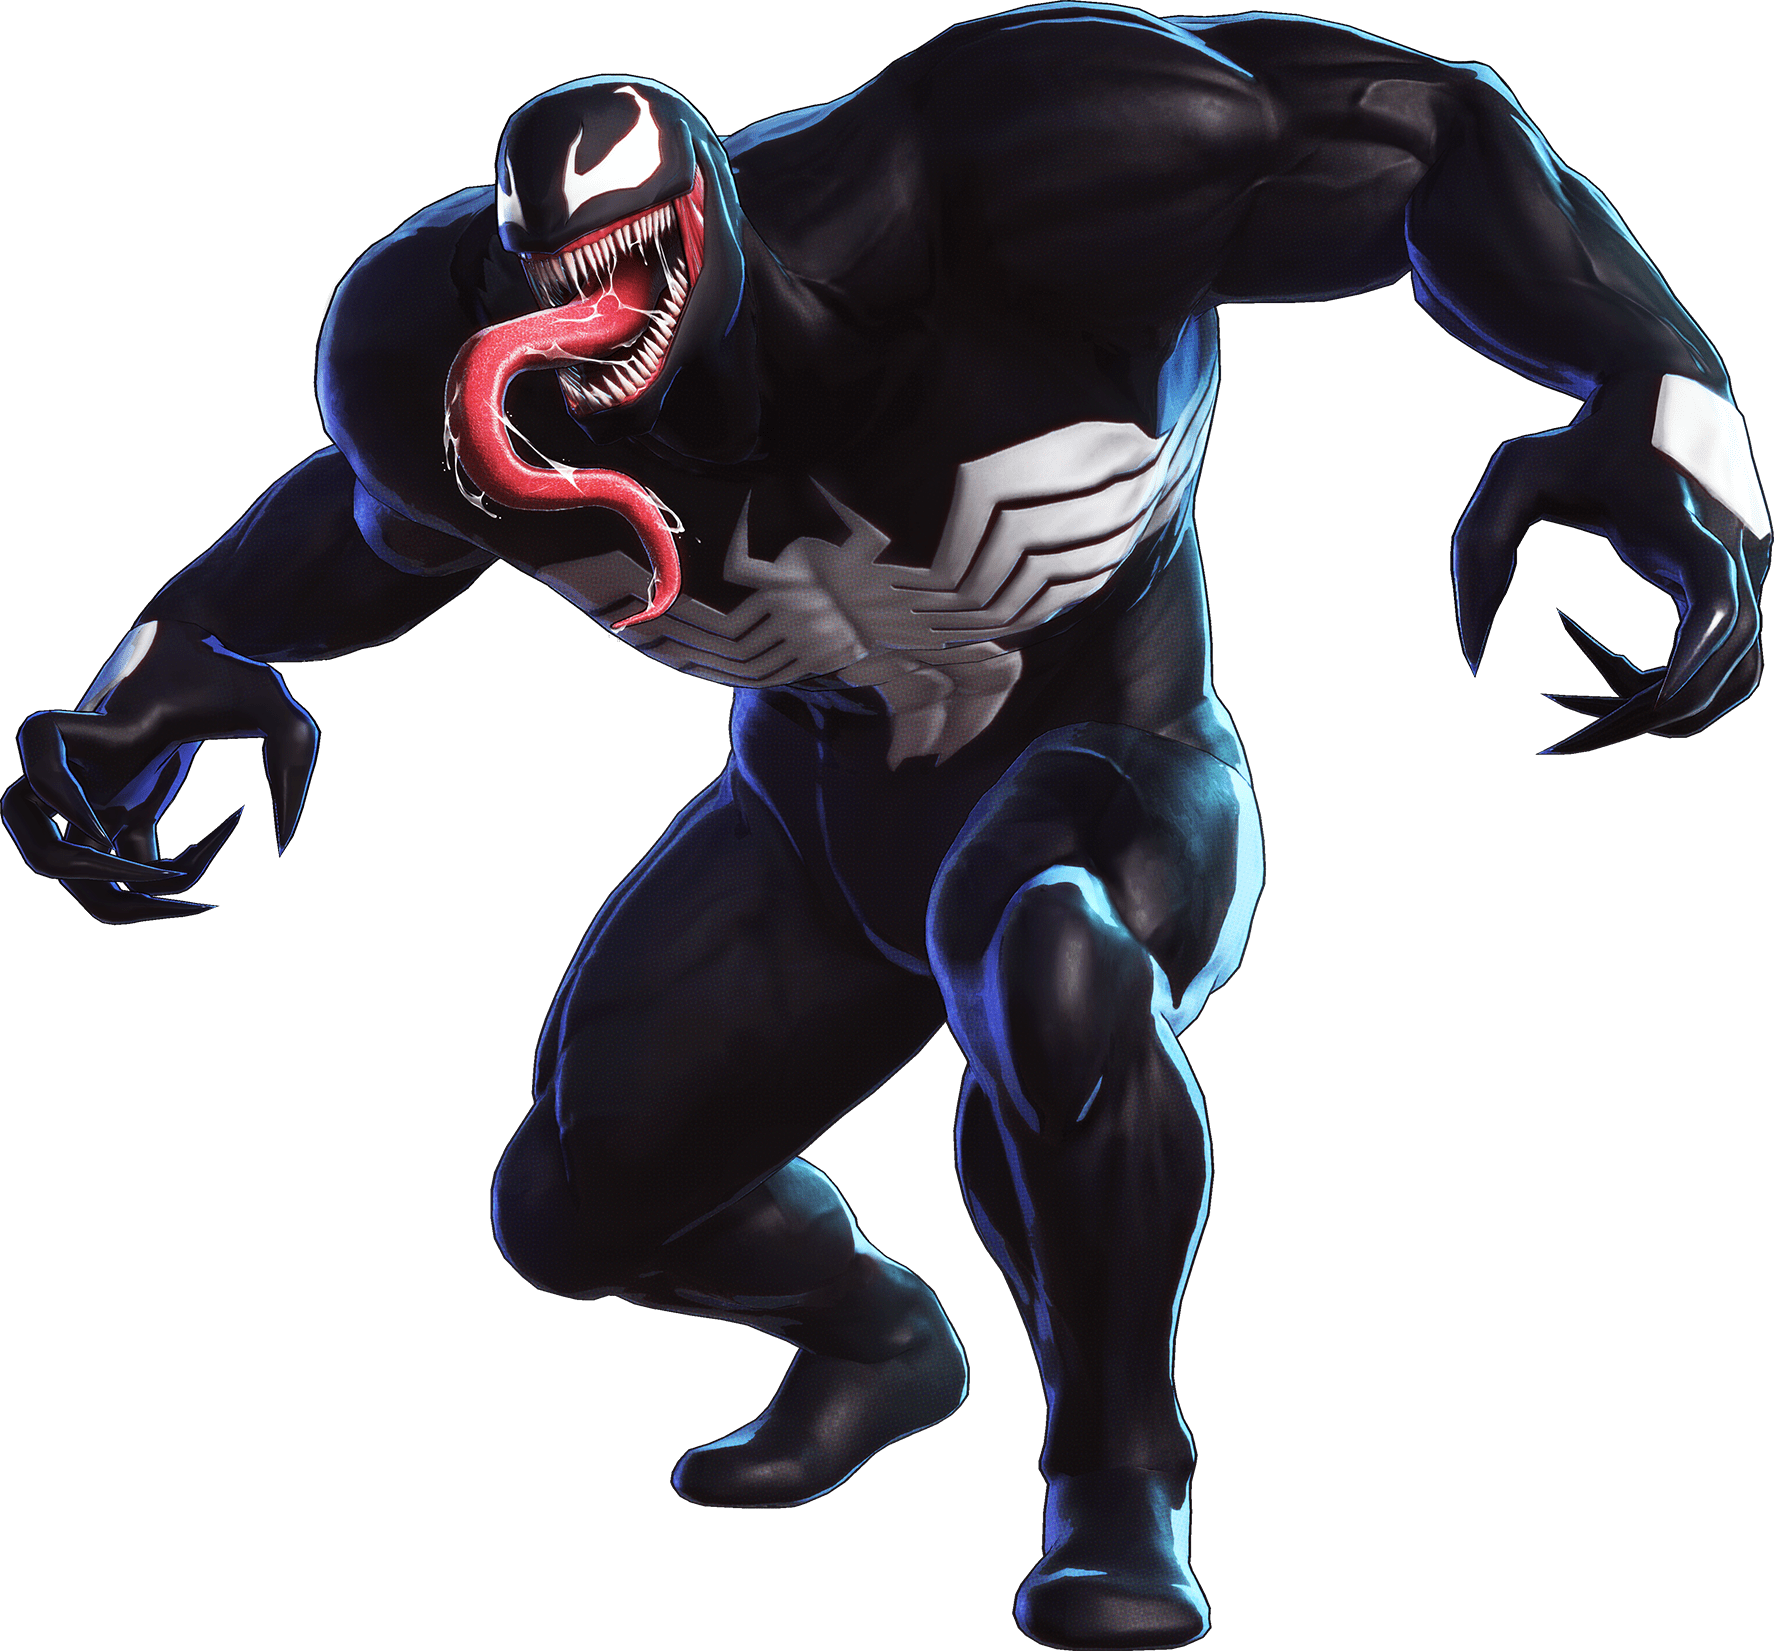 Venom download the new version for ipod